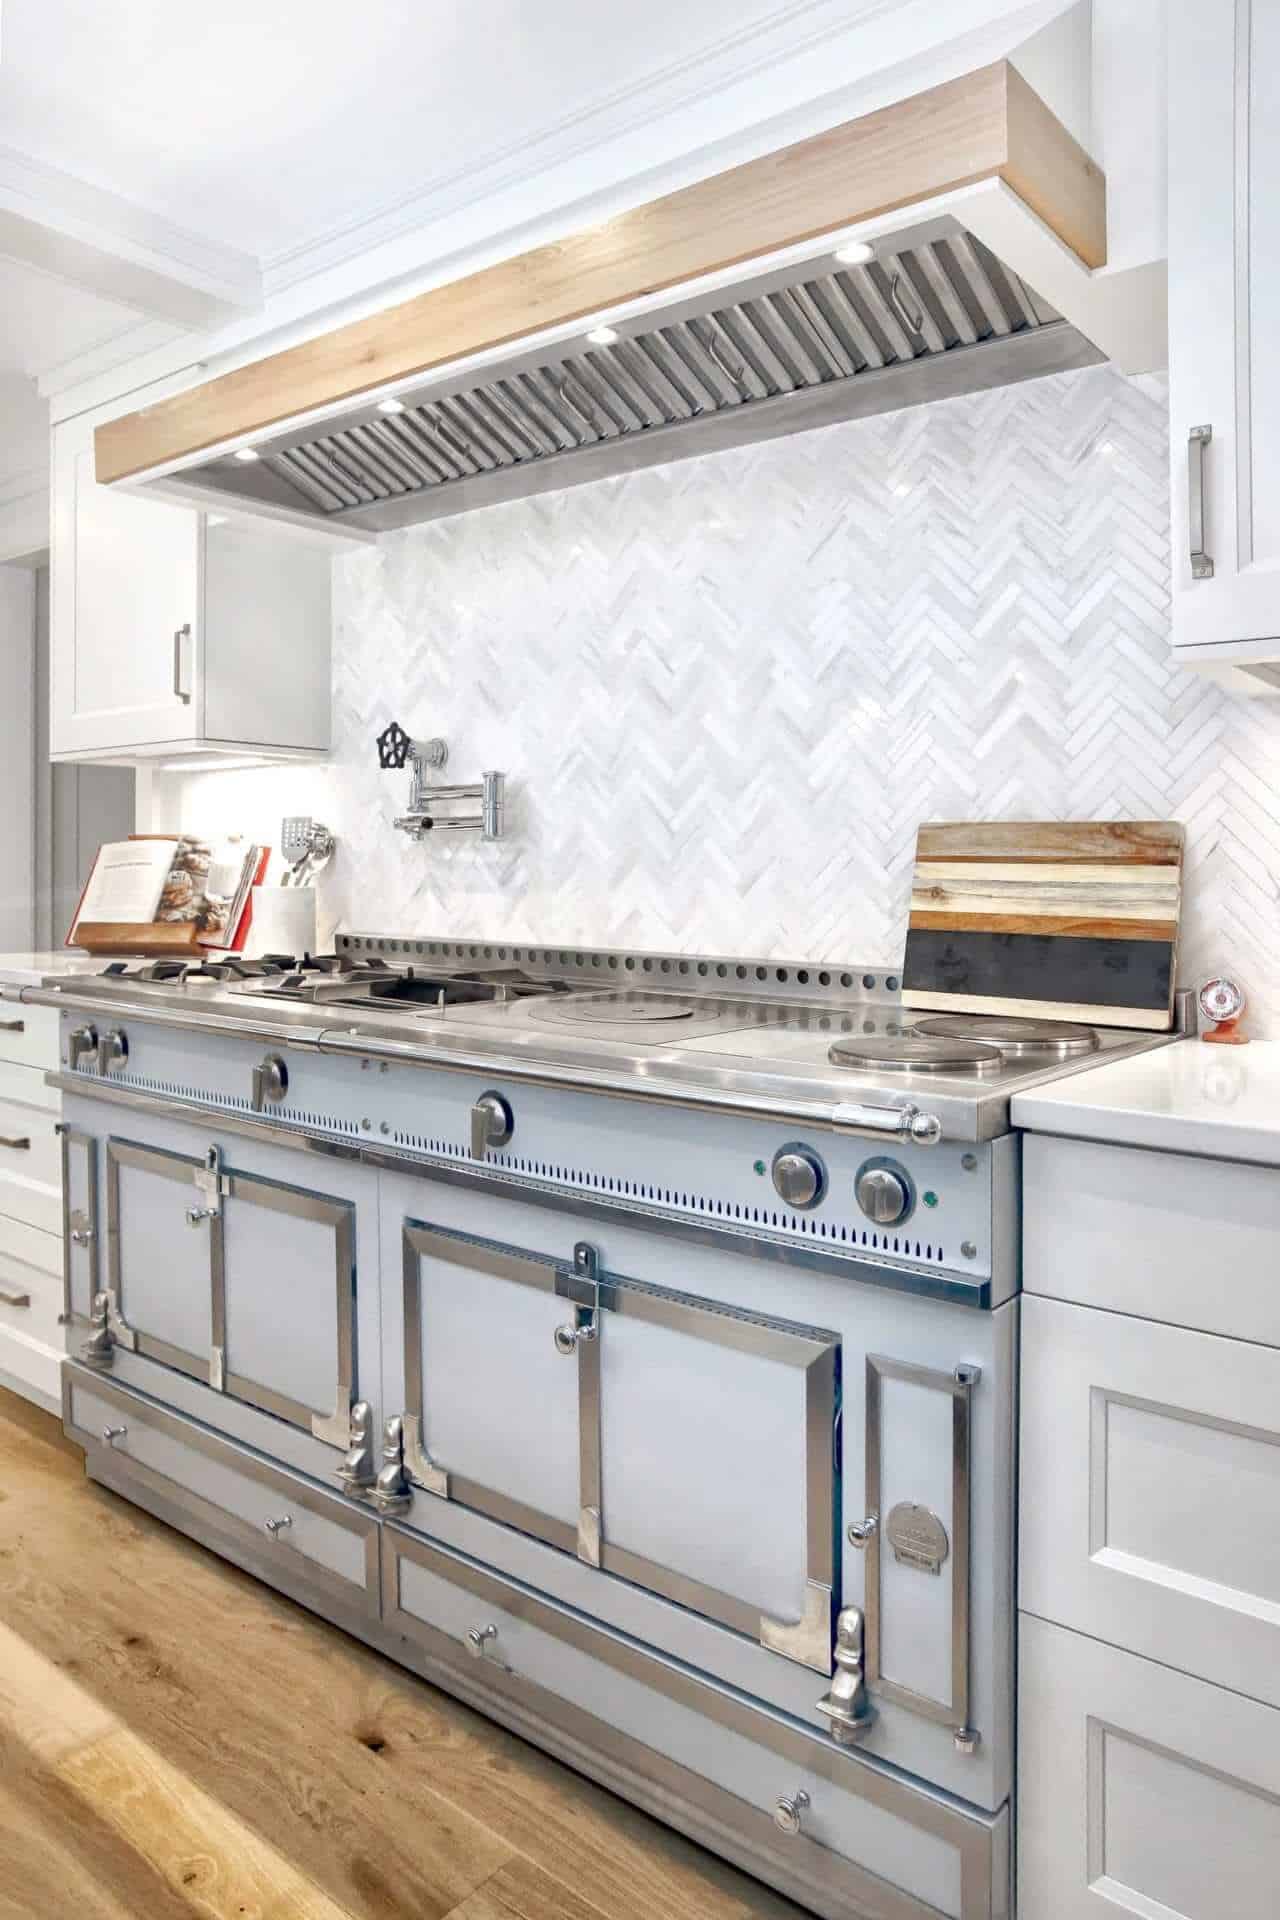 Antique-influenced kitchen features oversized La Cornue Range, chevron-patterned Waterworks tile backsplash and Dove White NAC cabinets.